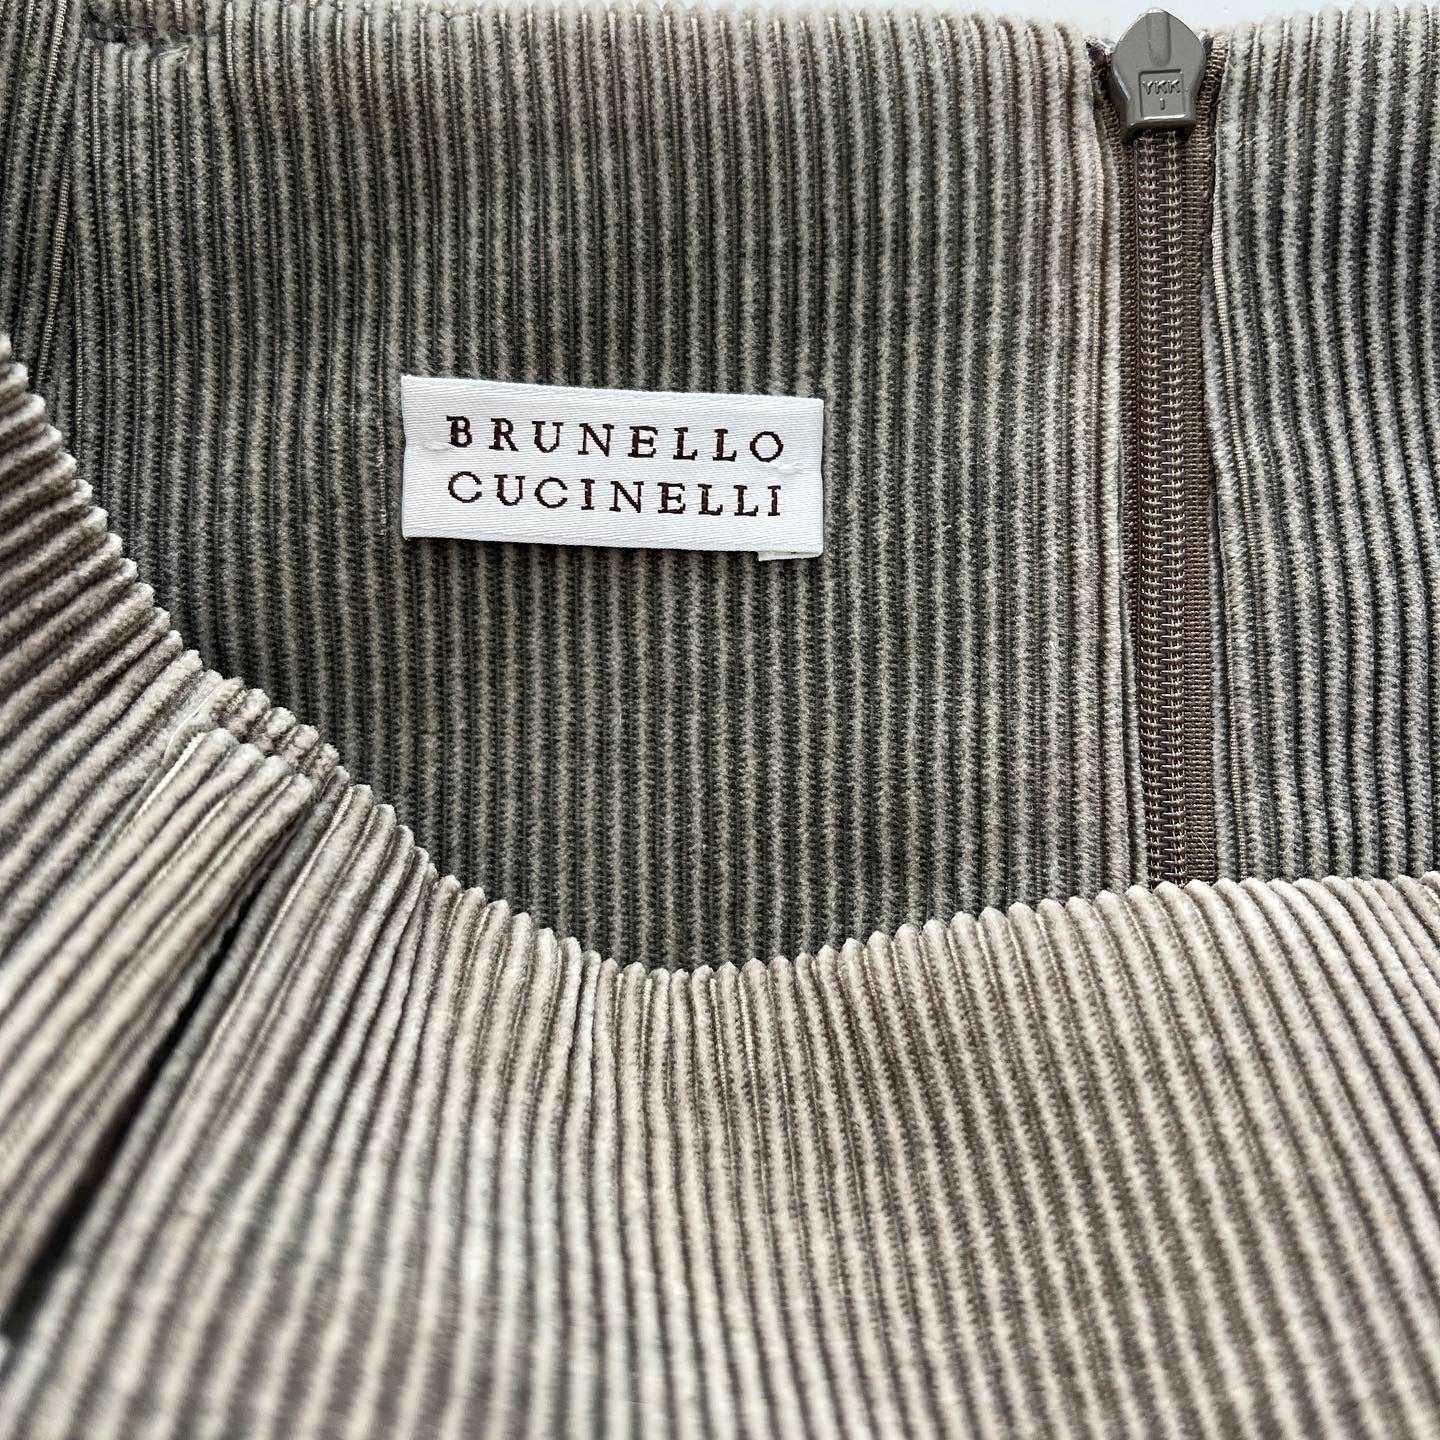 BRUNELLO CUCINELLI - BRUNELLO CUCINELLI Asymmetric Skirt - AVVIIVVA.COM